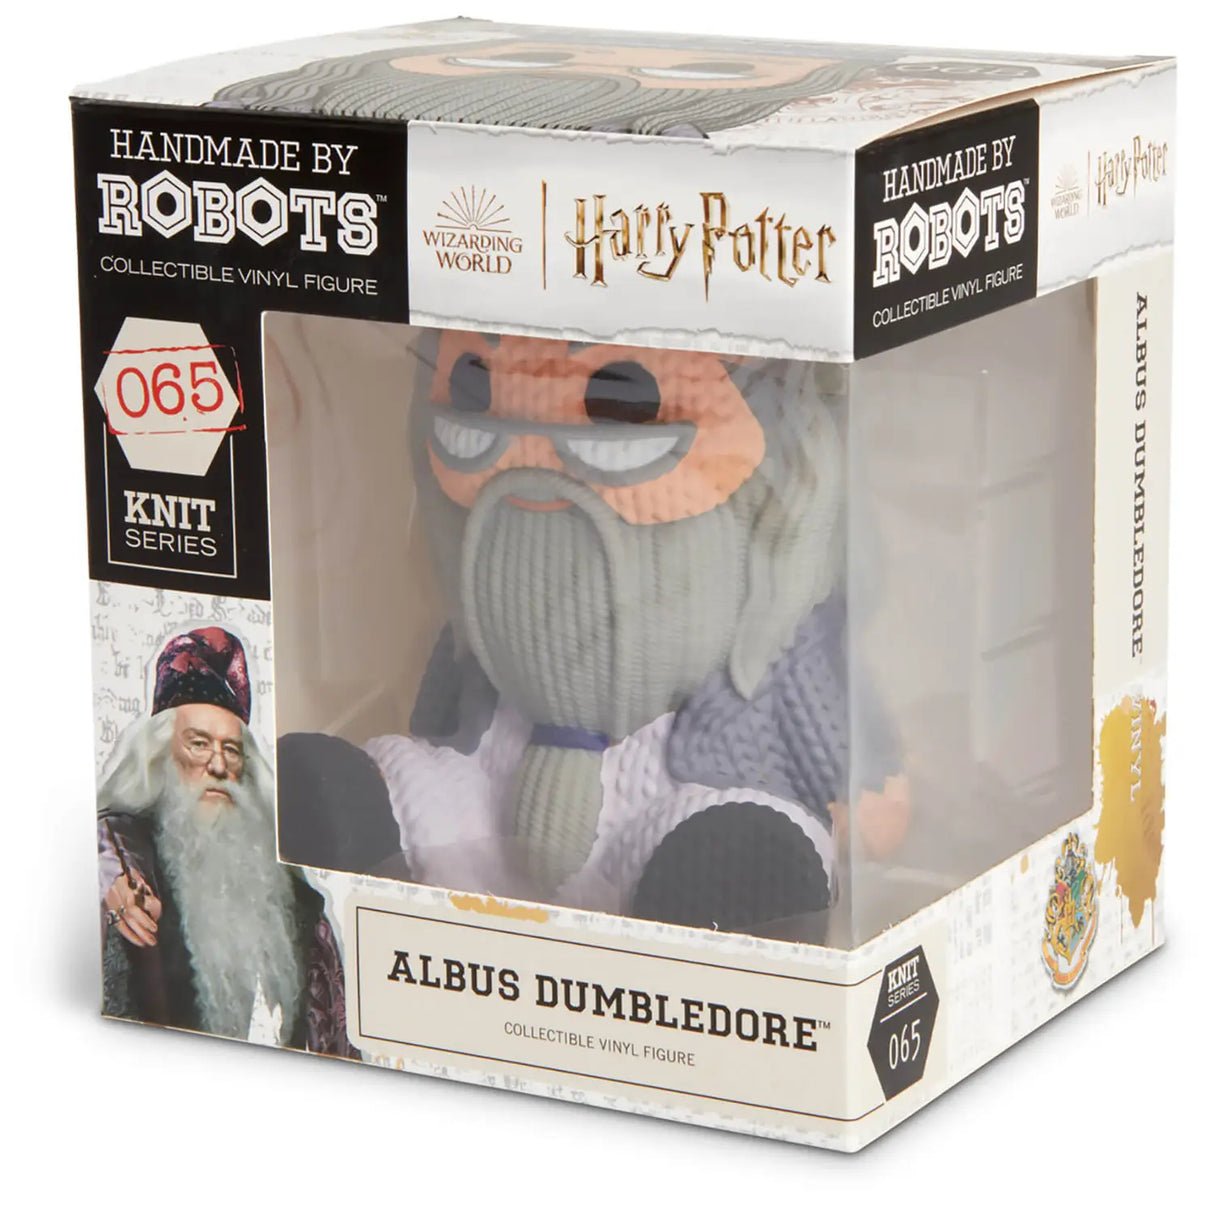 Handmade by Robots | Harry Potter | Albus Dumbledore Vinyl Figure | Knit Series #065